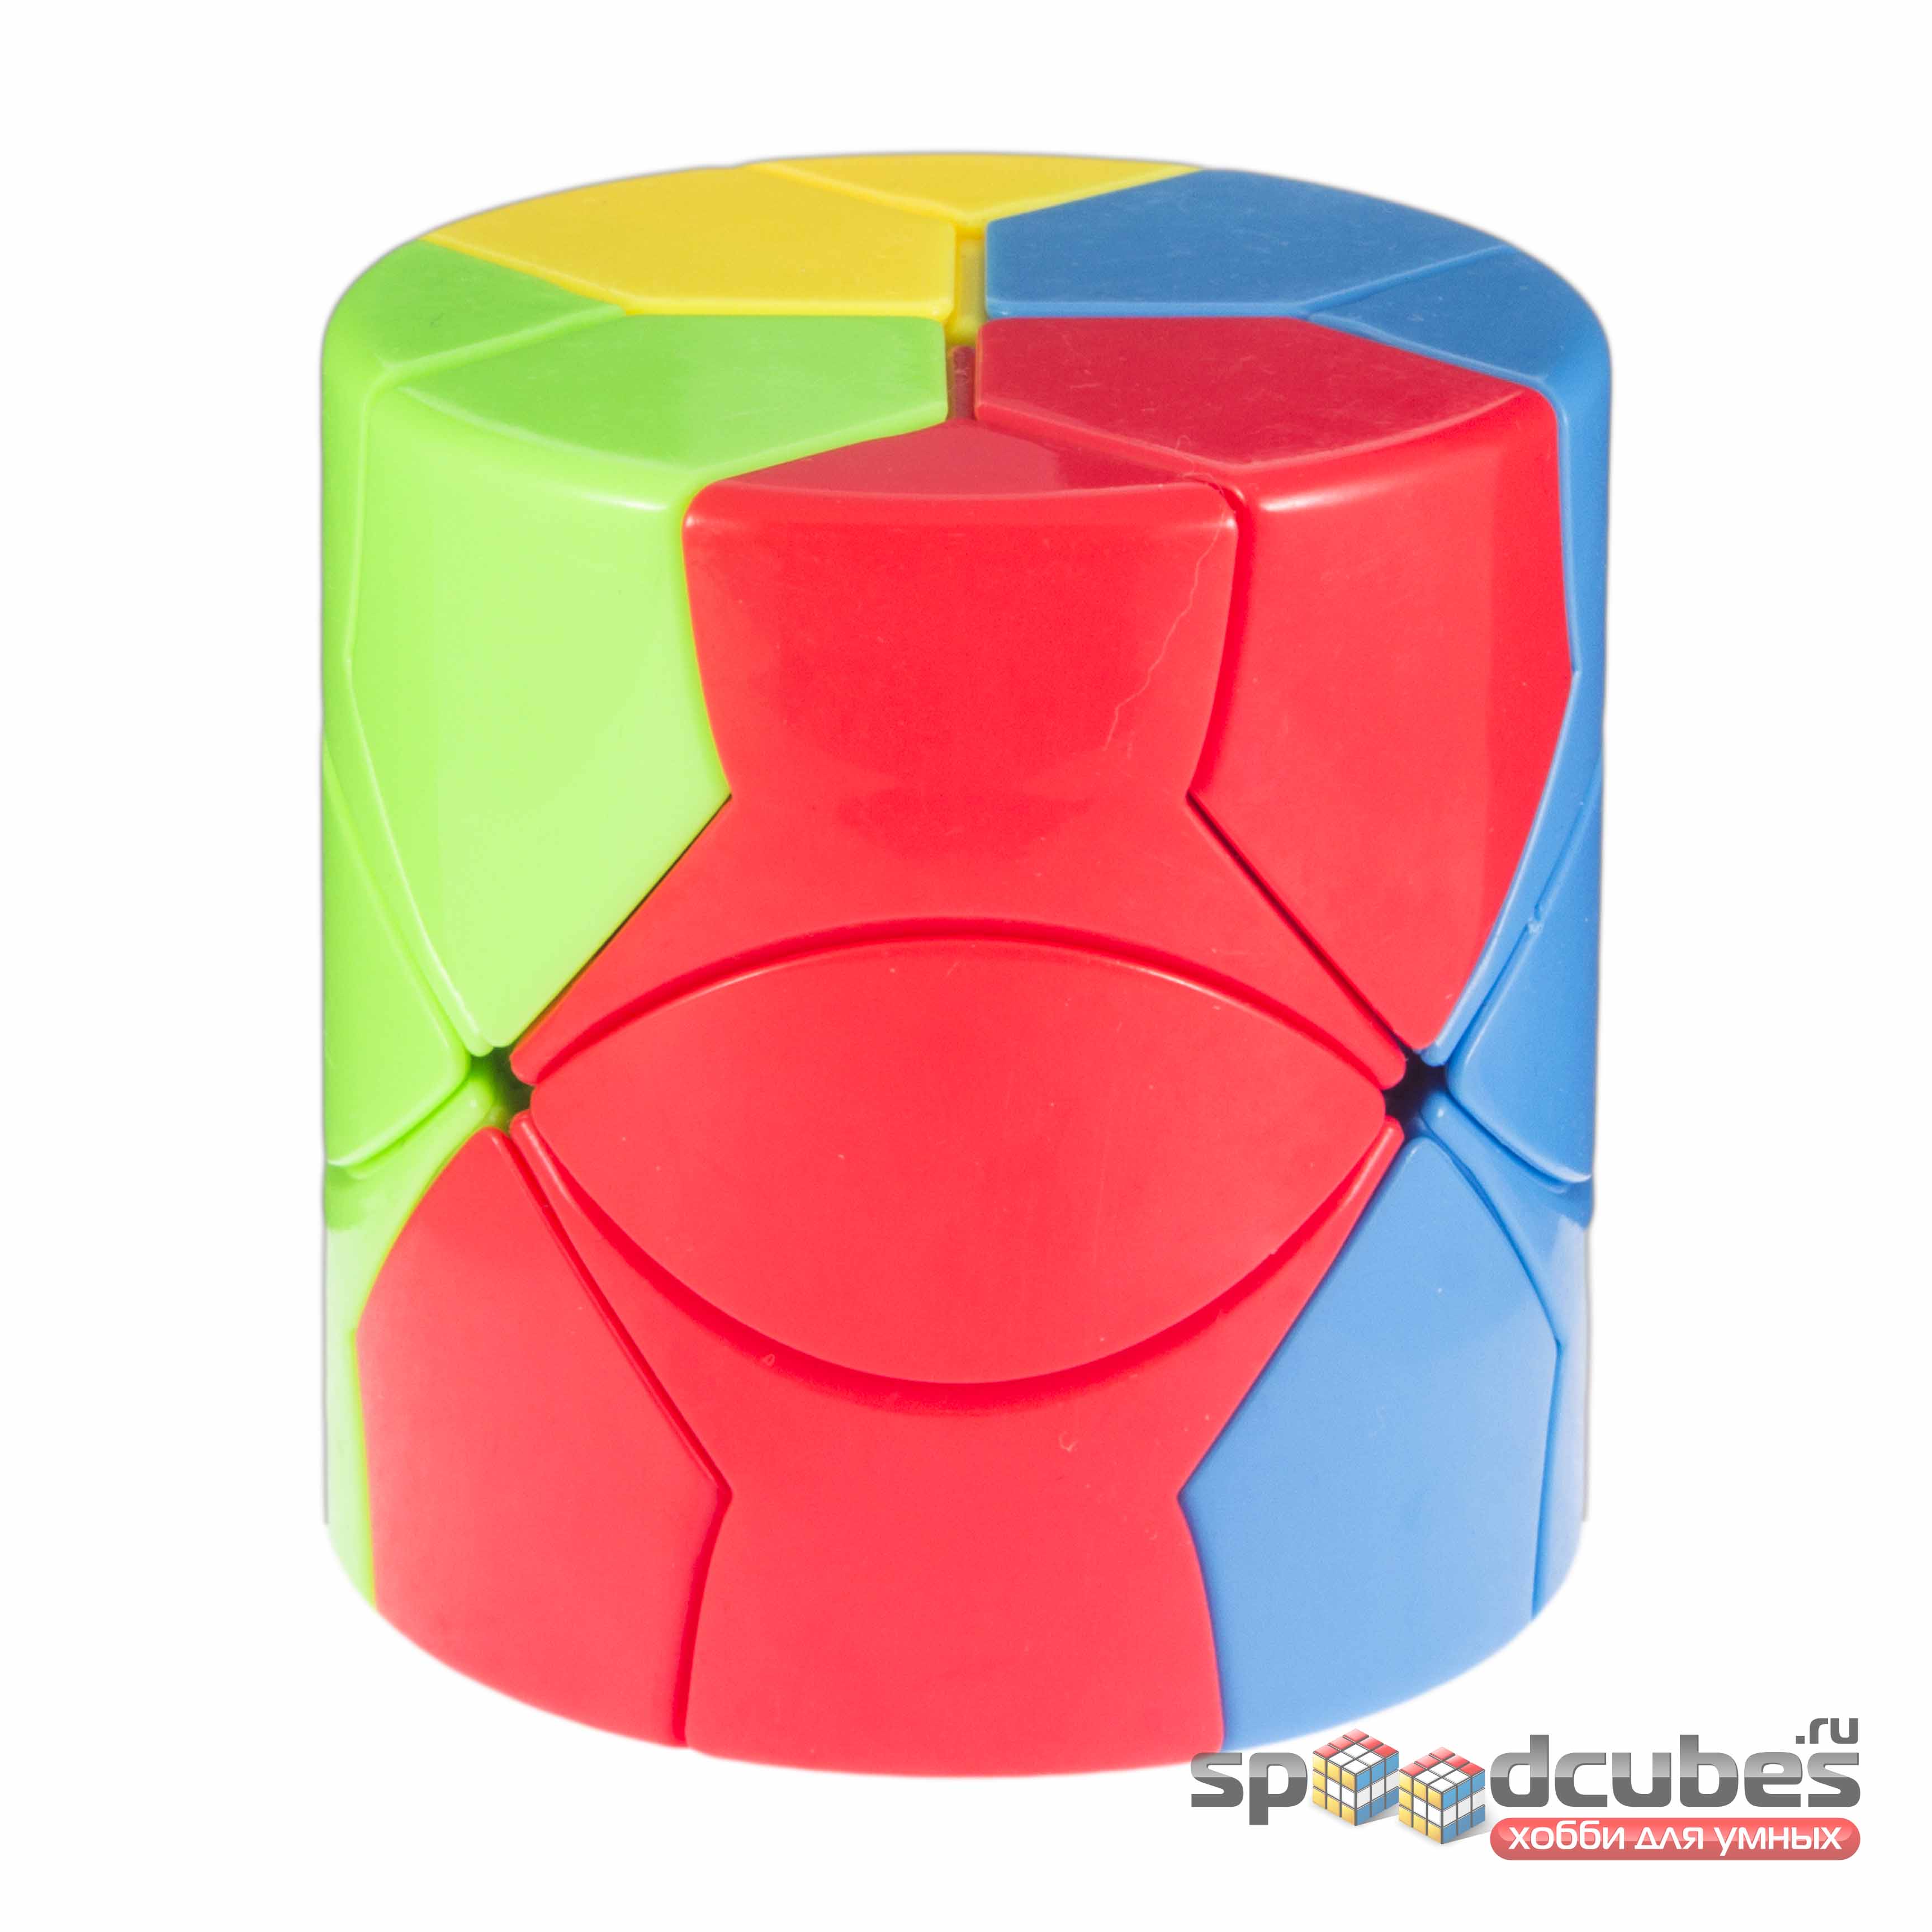 Moyu Barrel Redi Cube Color 2